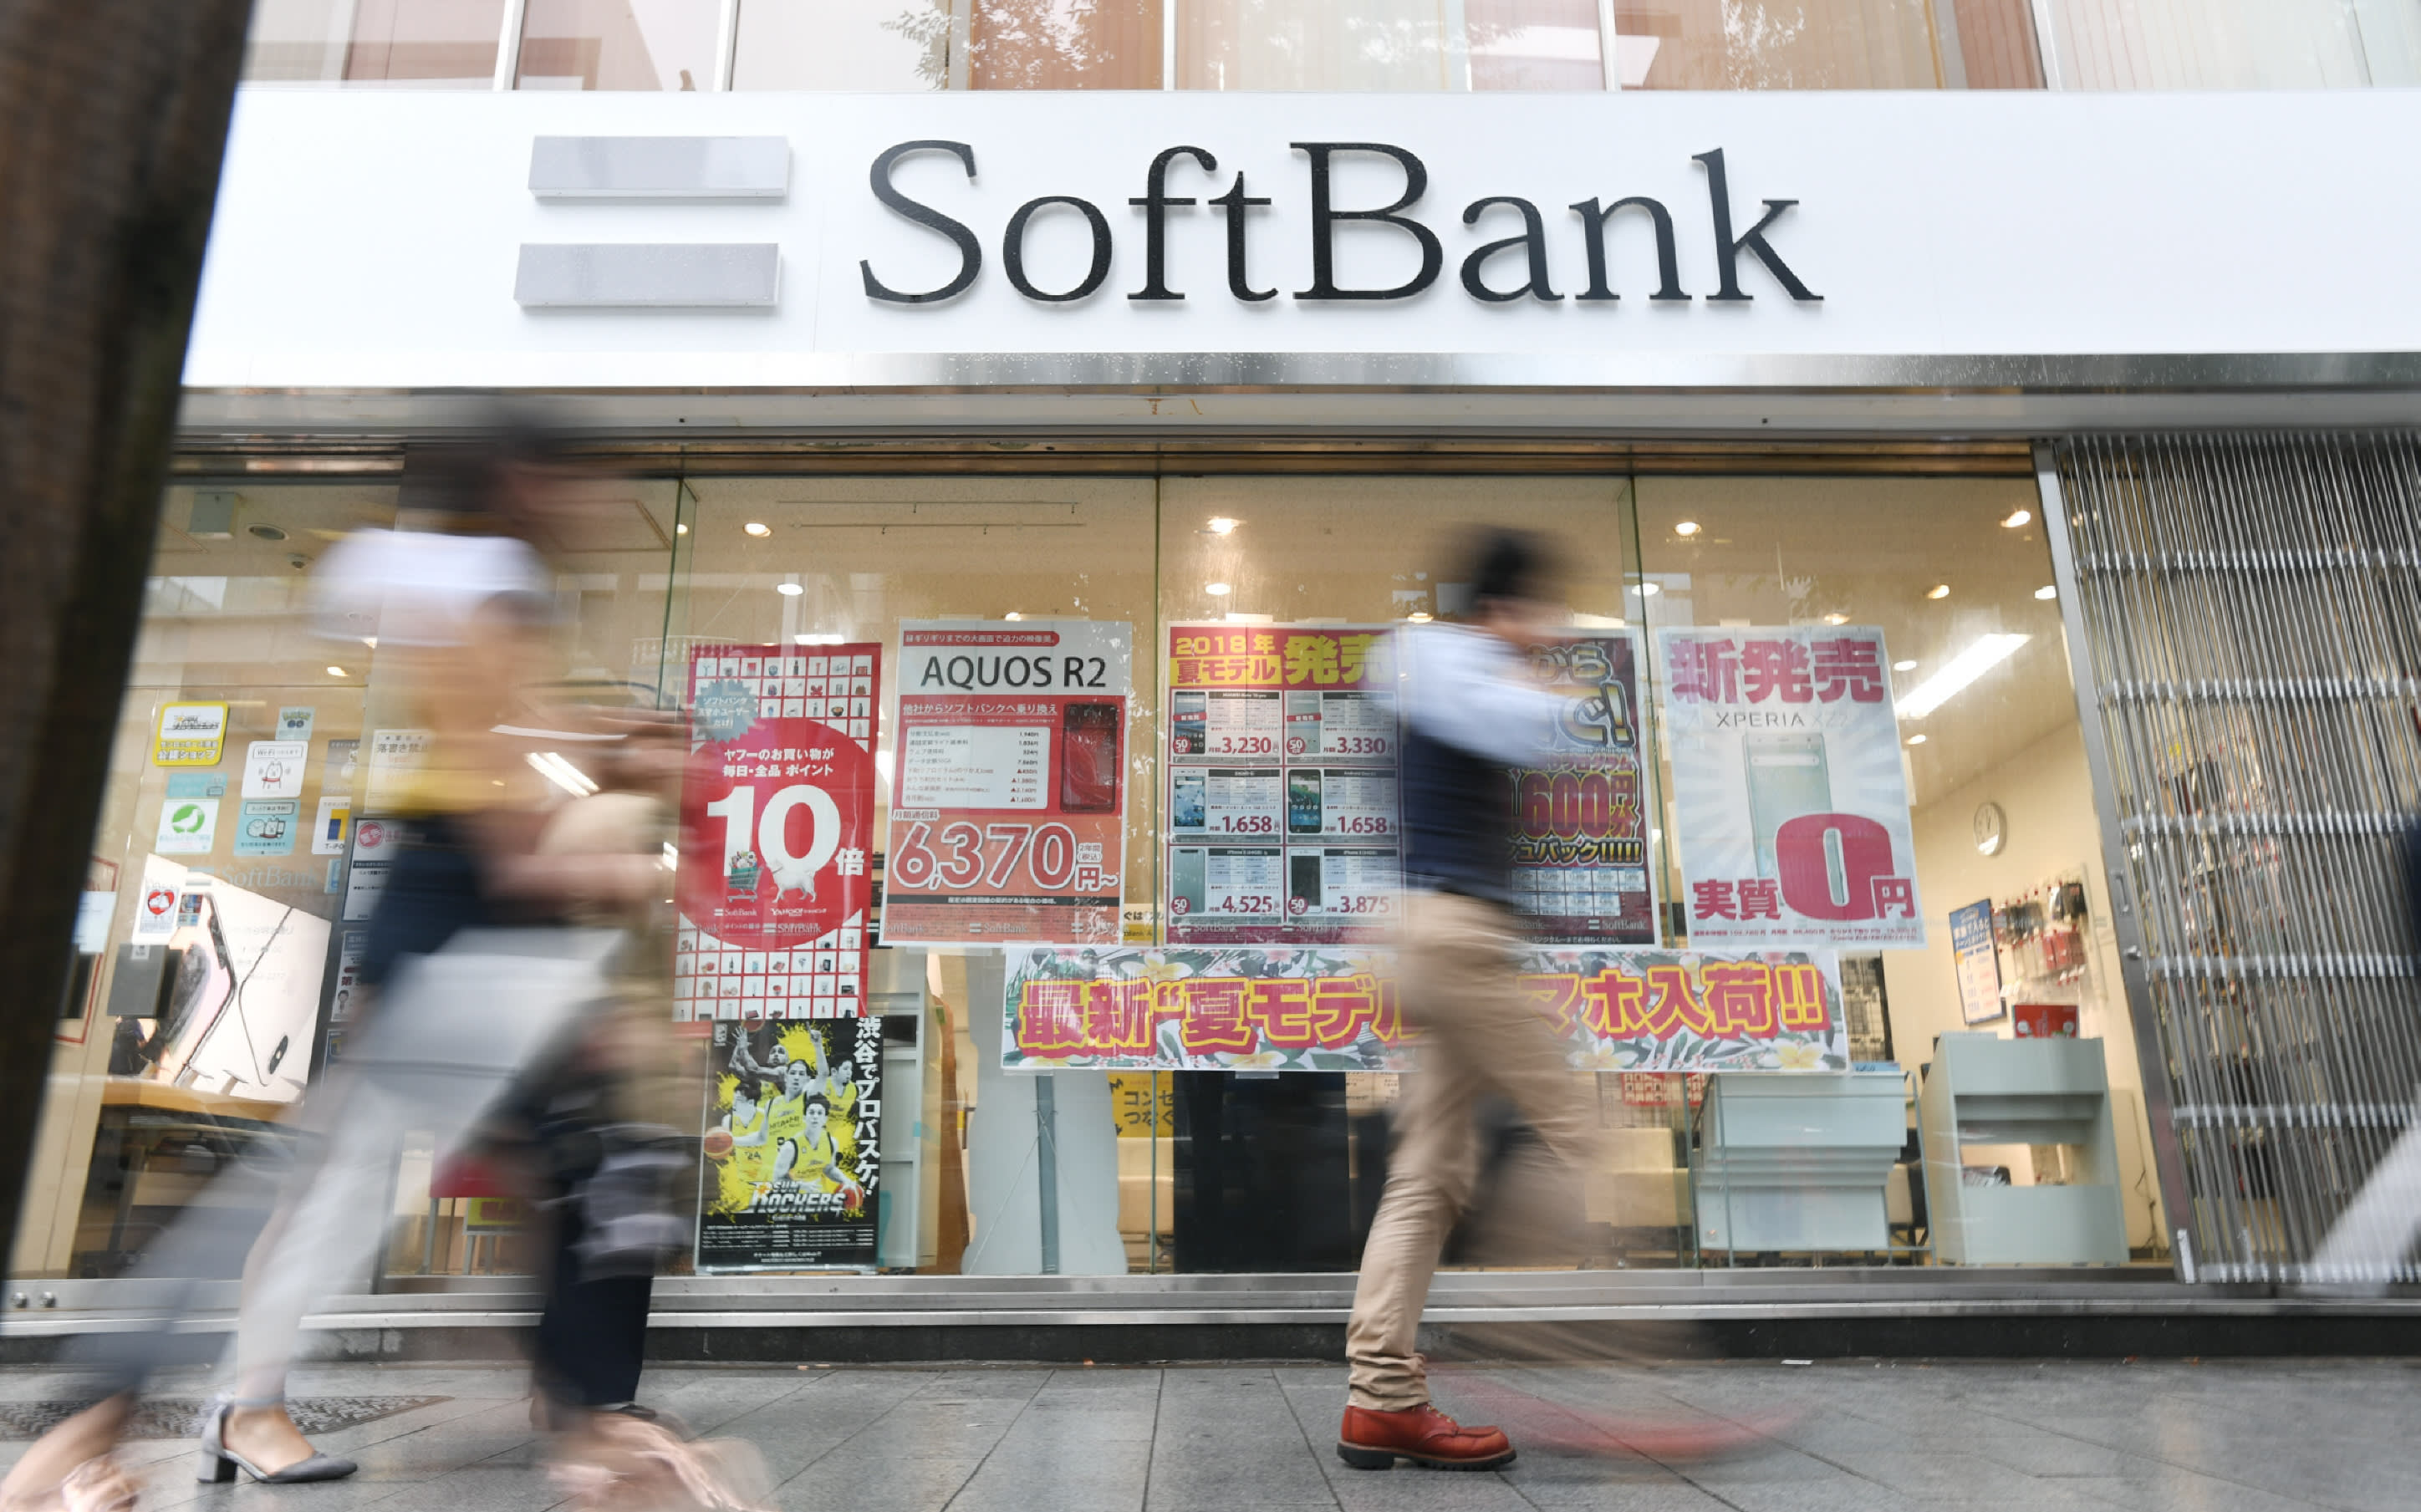 Softbank Japan - storefront image